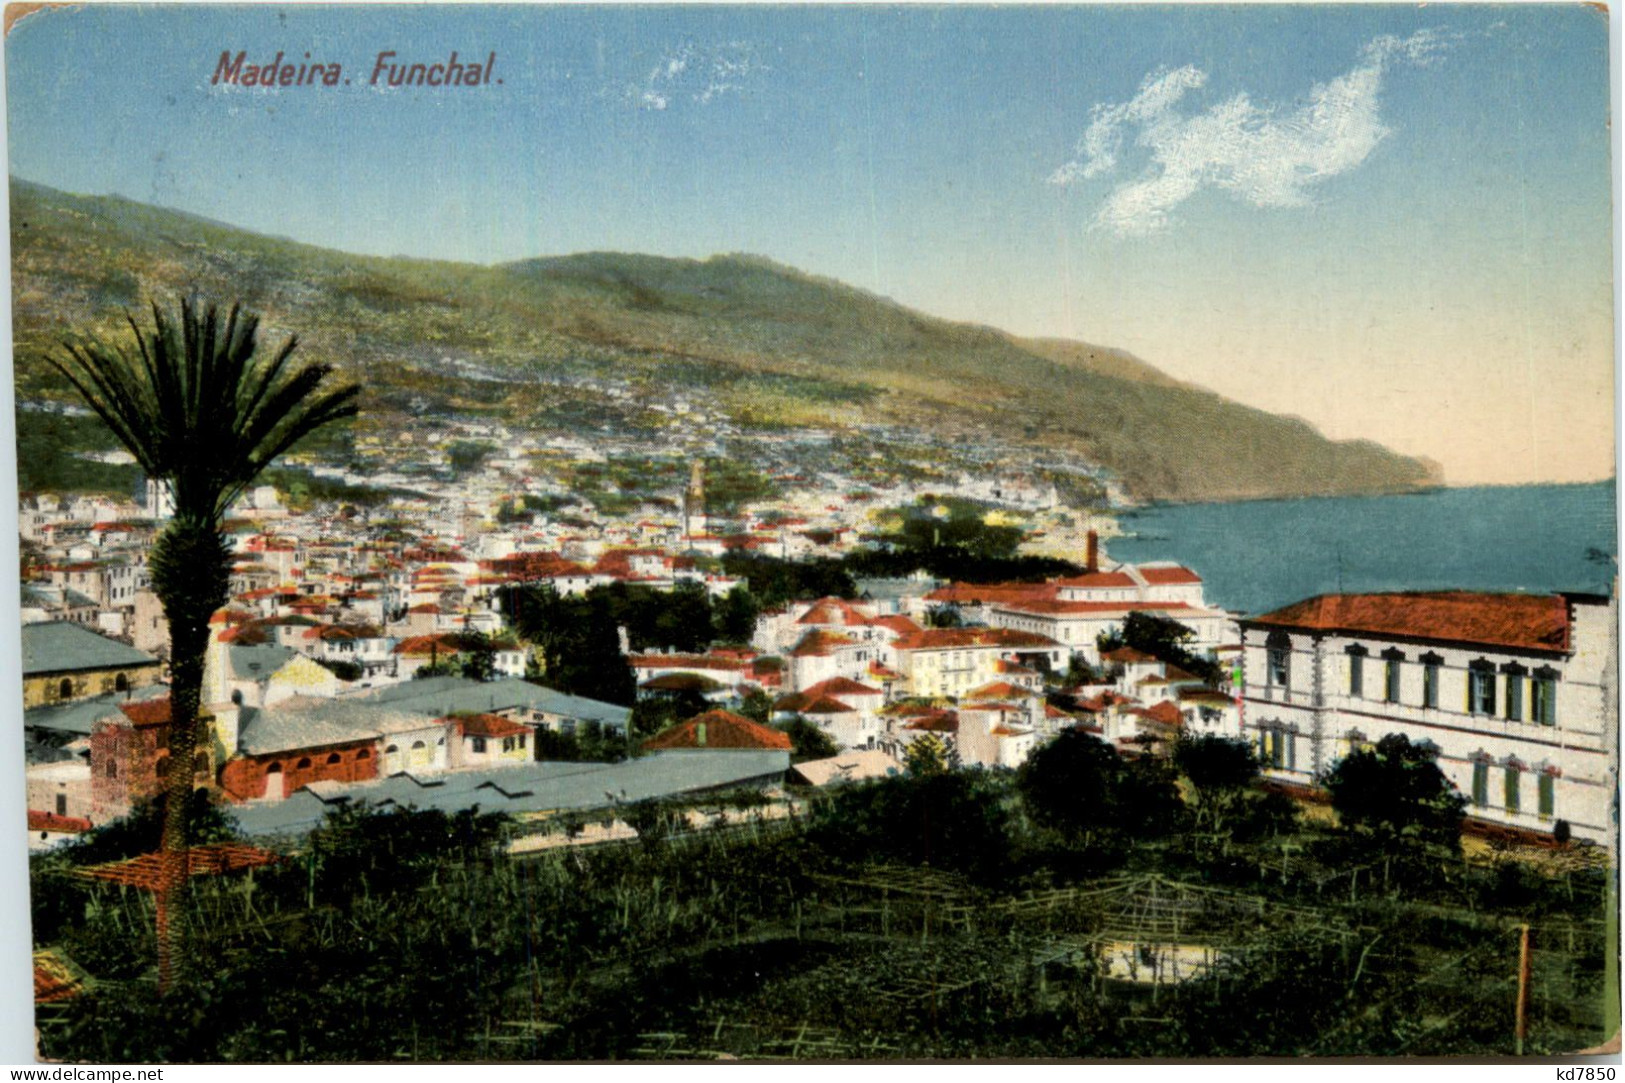 Madeira - Funchal - Madeira